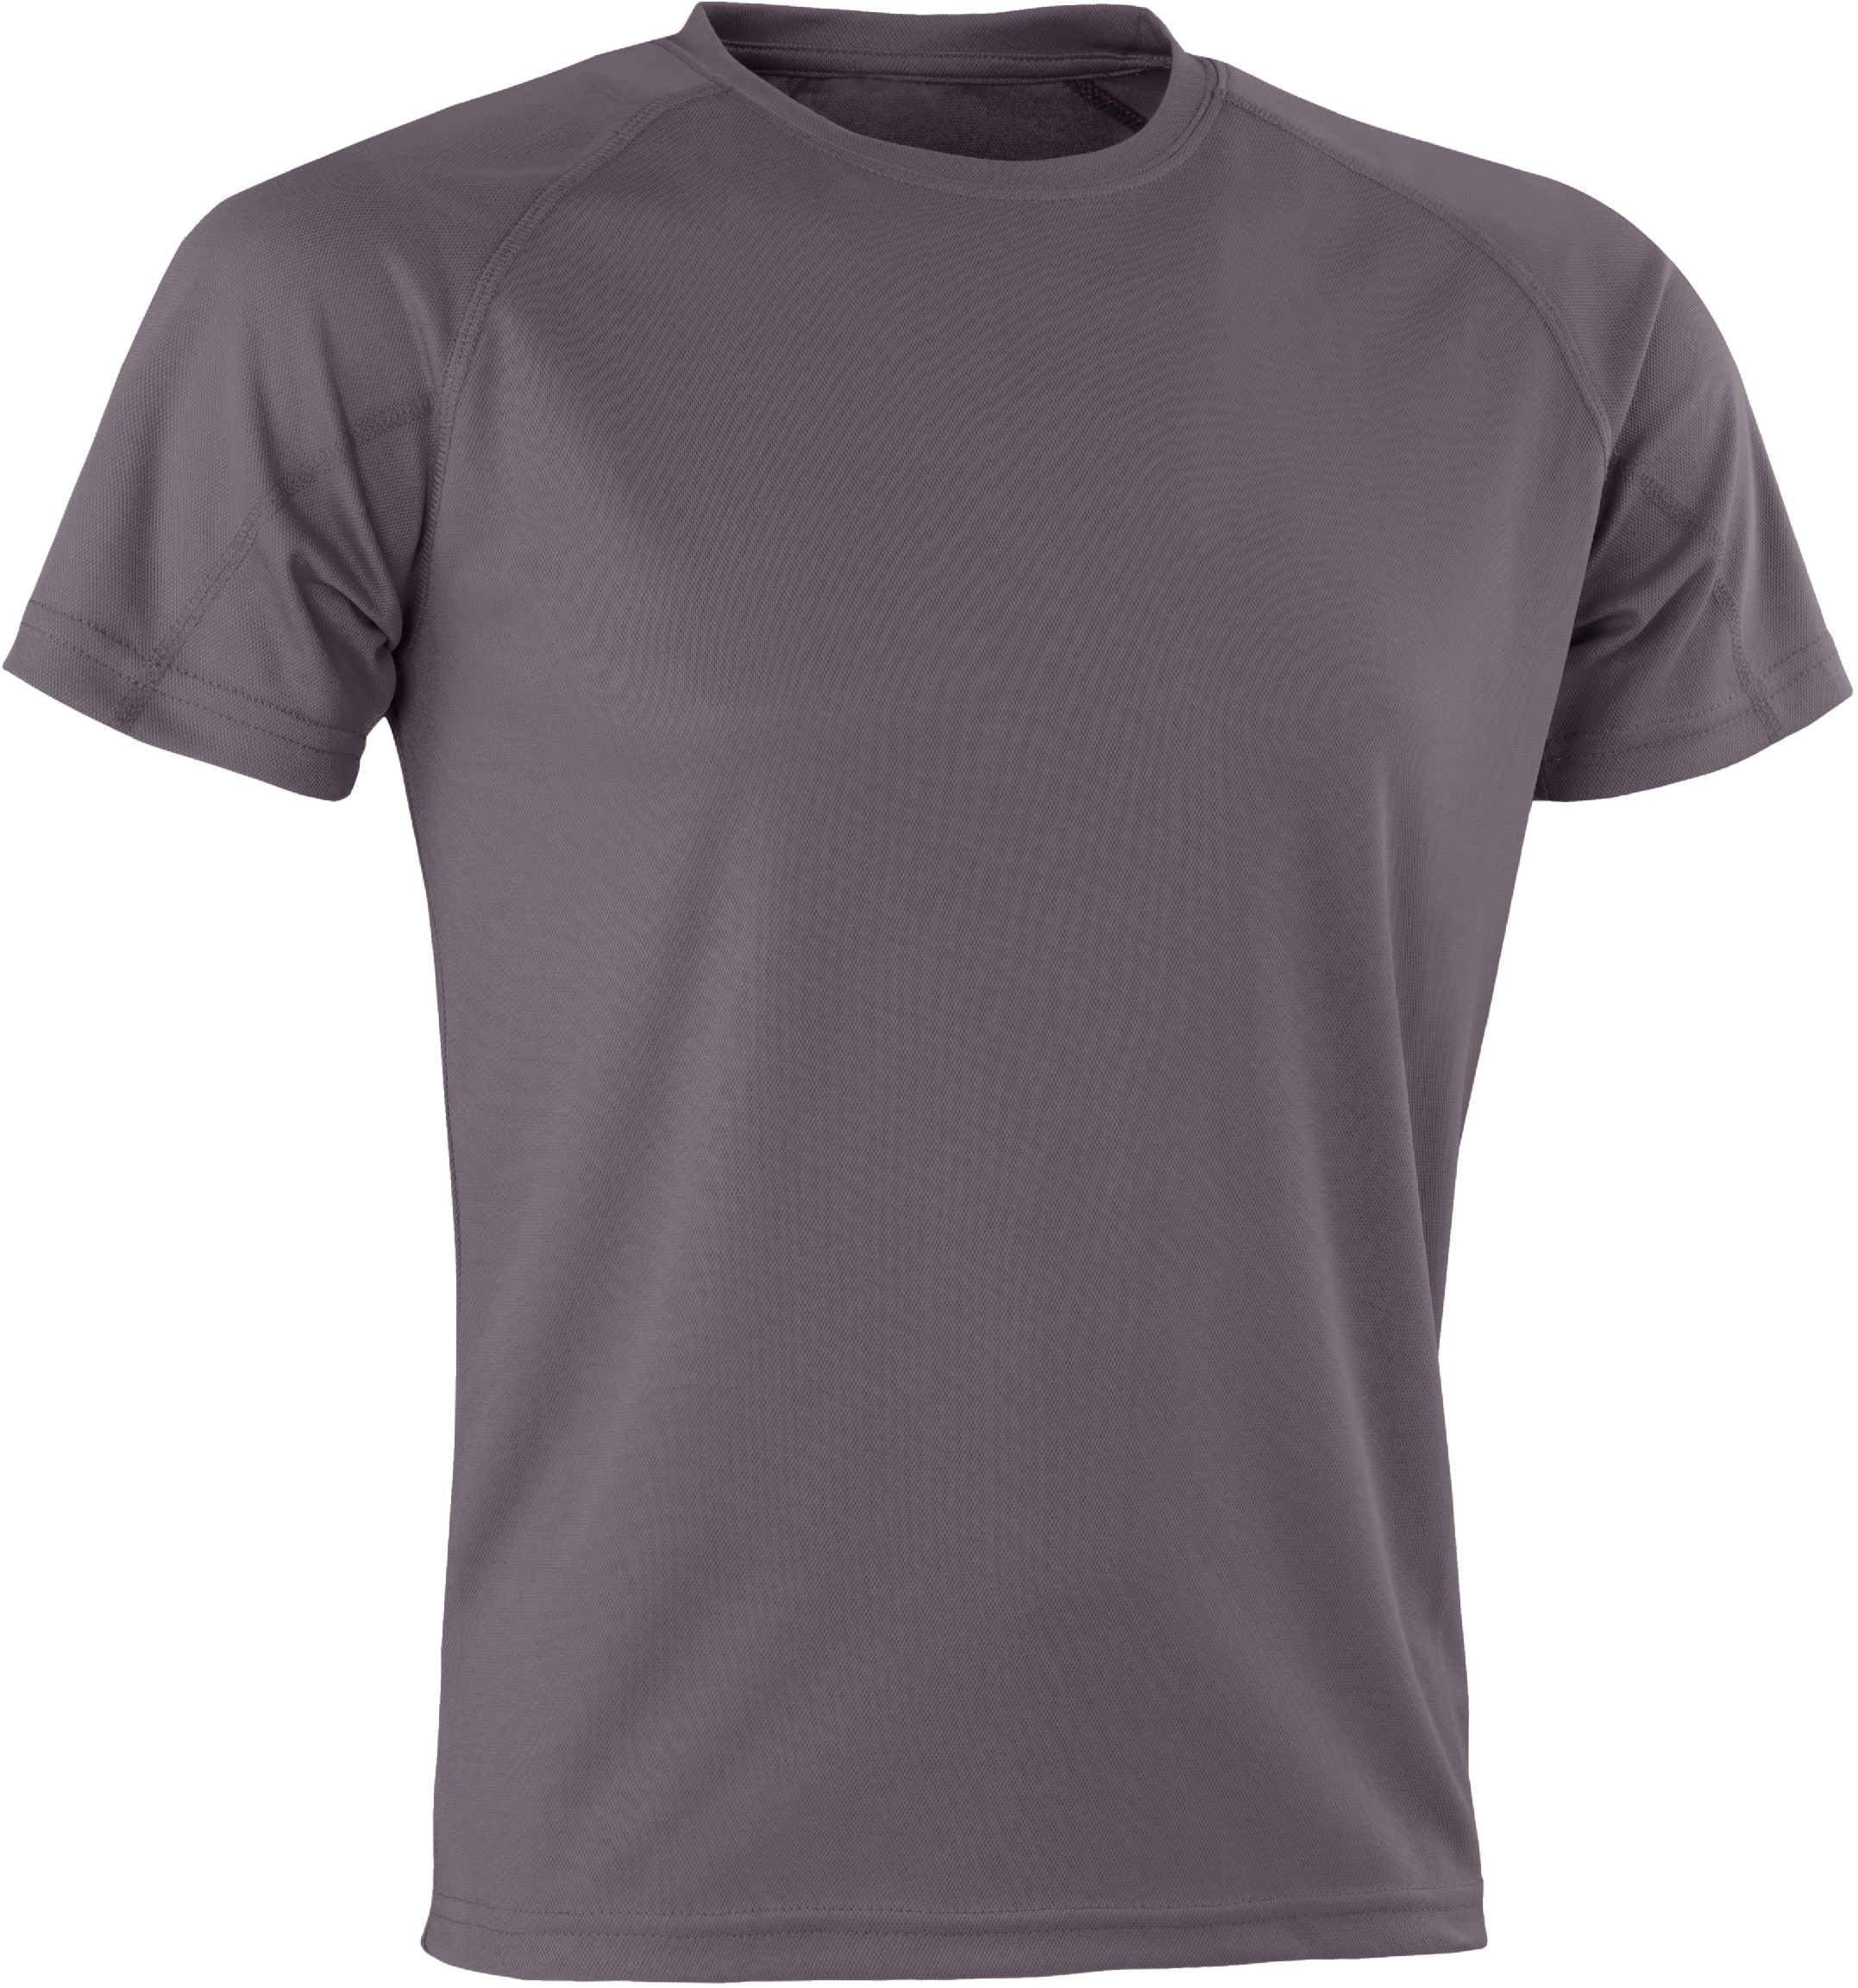 Sportovní tričko Aircool S287X Barva: šedá, Velikost: M